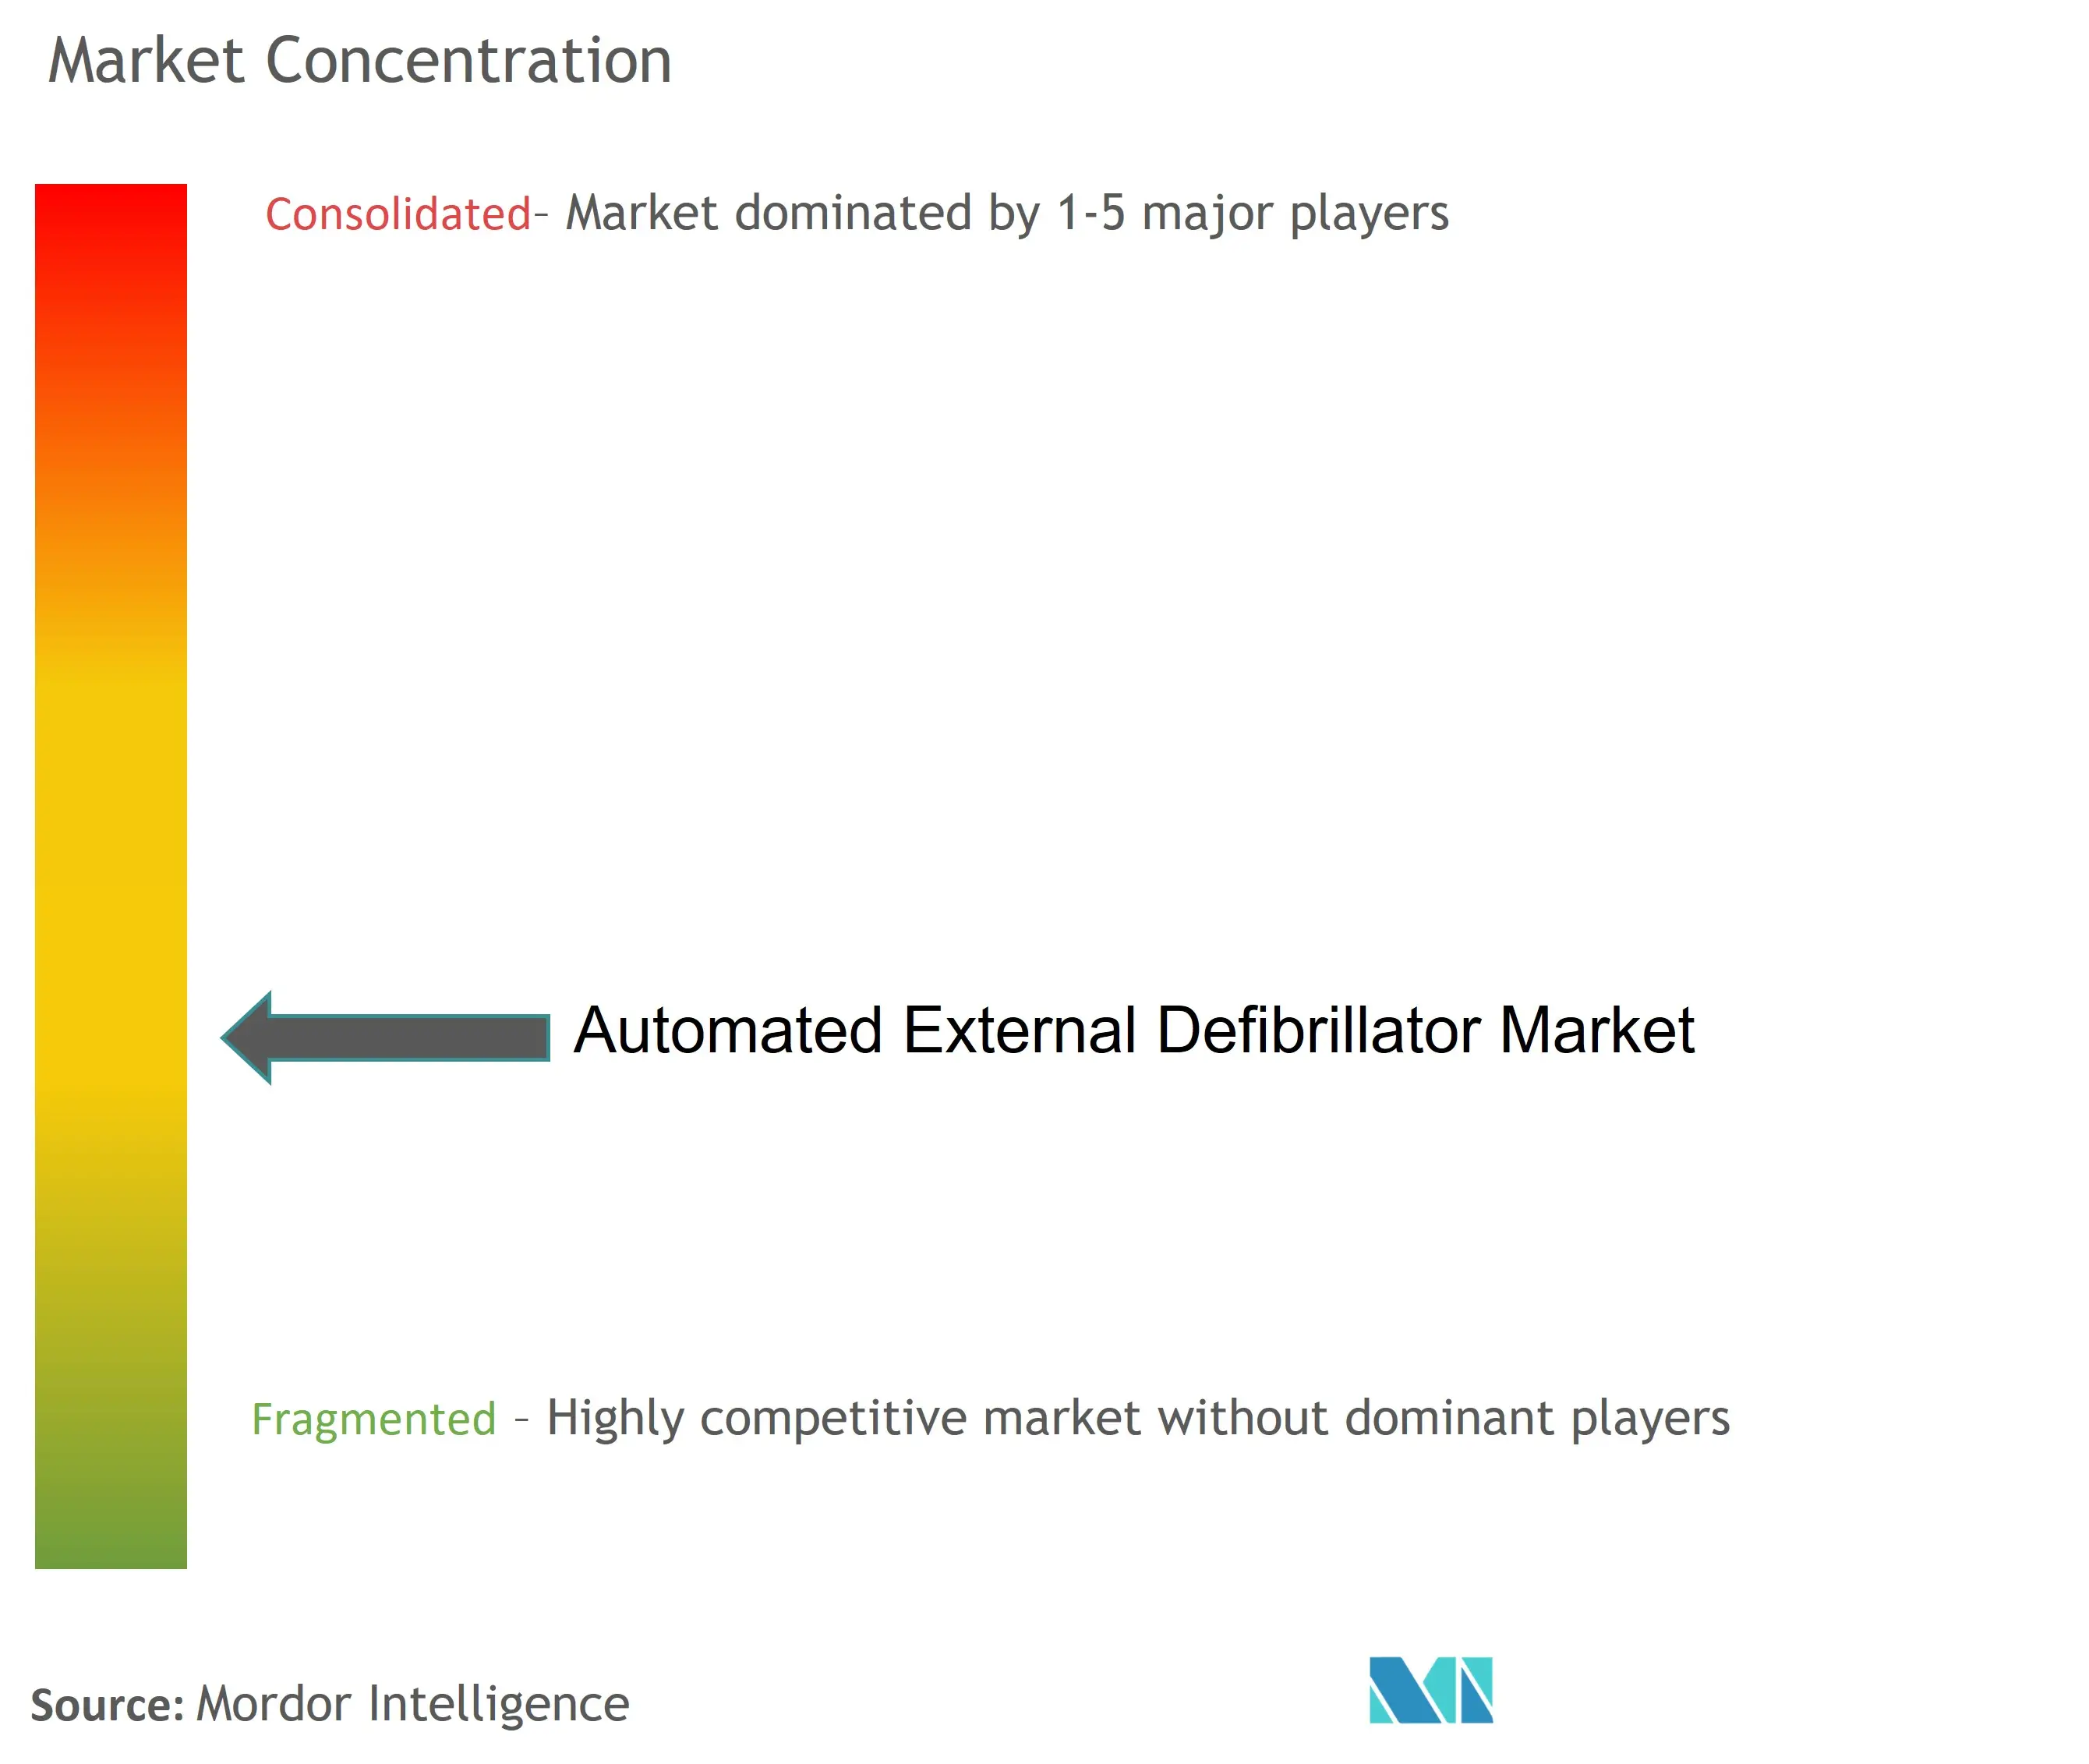 Automated External Defibrillator Market Concentration